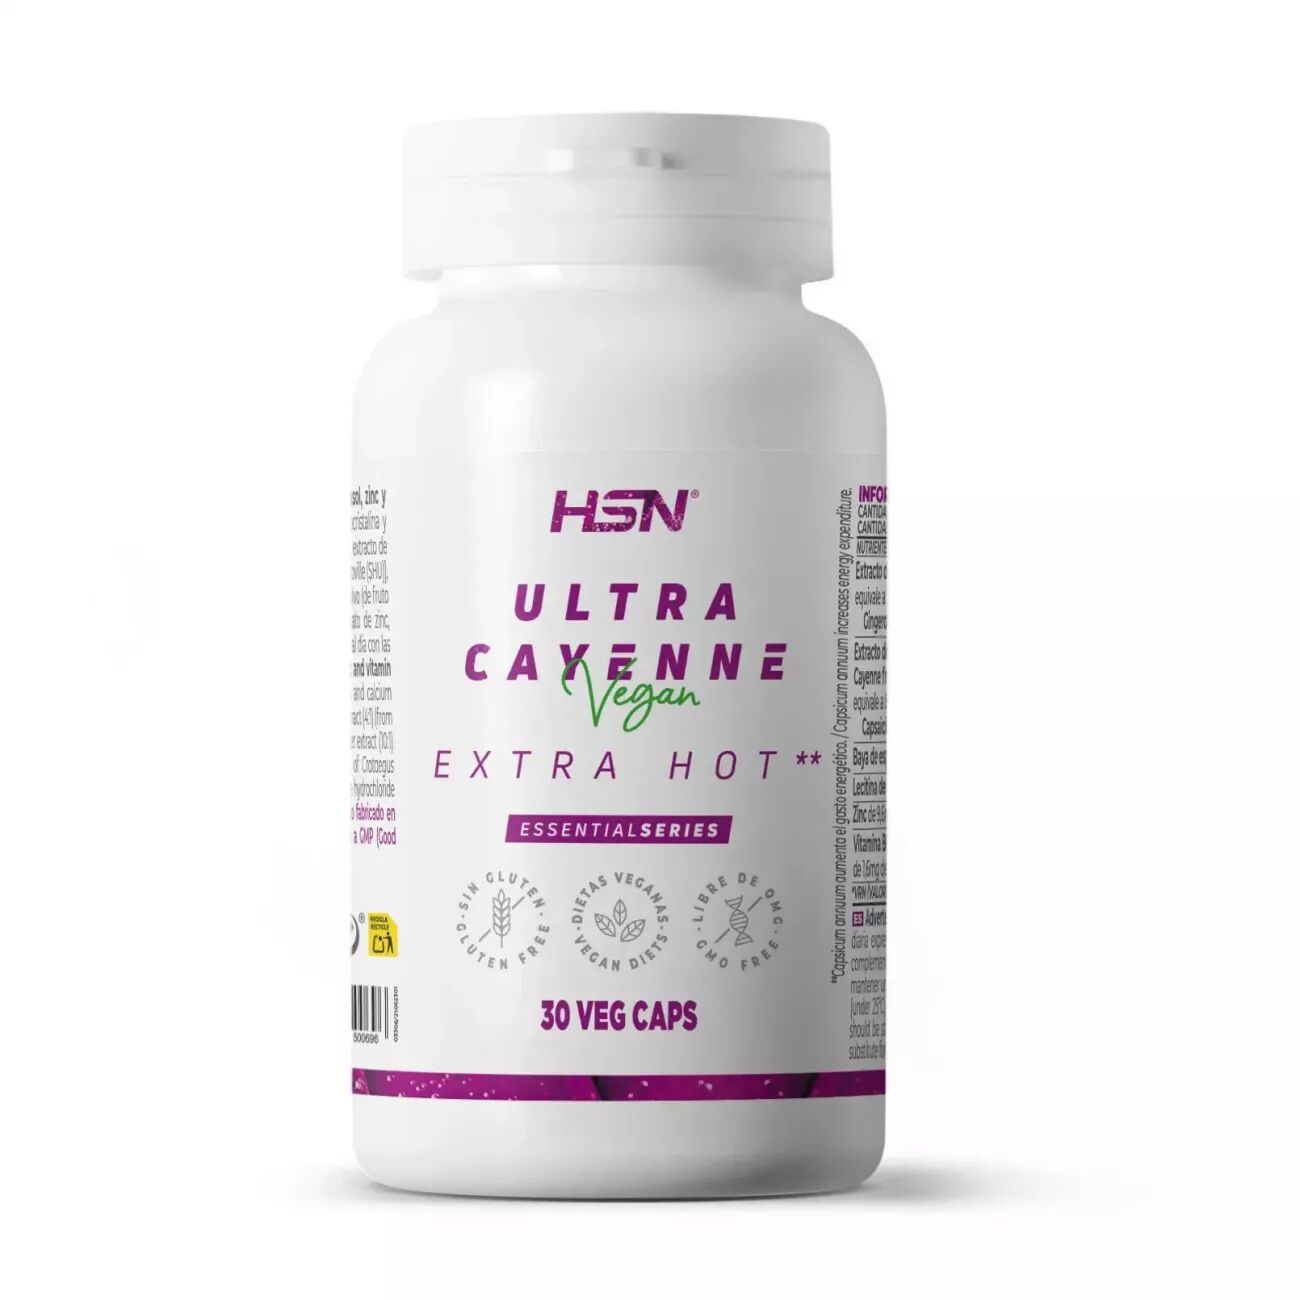 HSN Ultra cayenne extra hot*(2,25% capsaïcine) - 30 veg caps